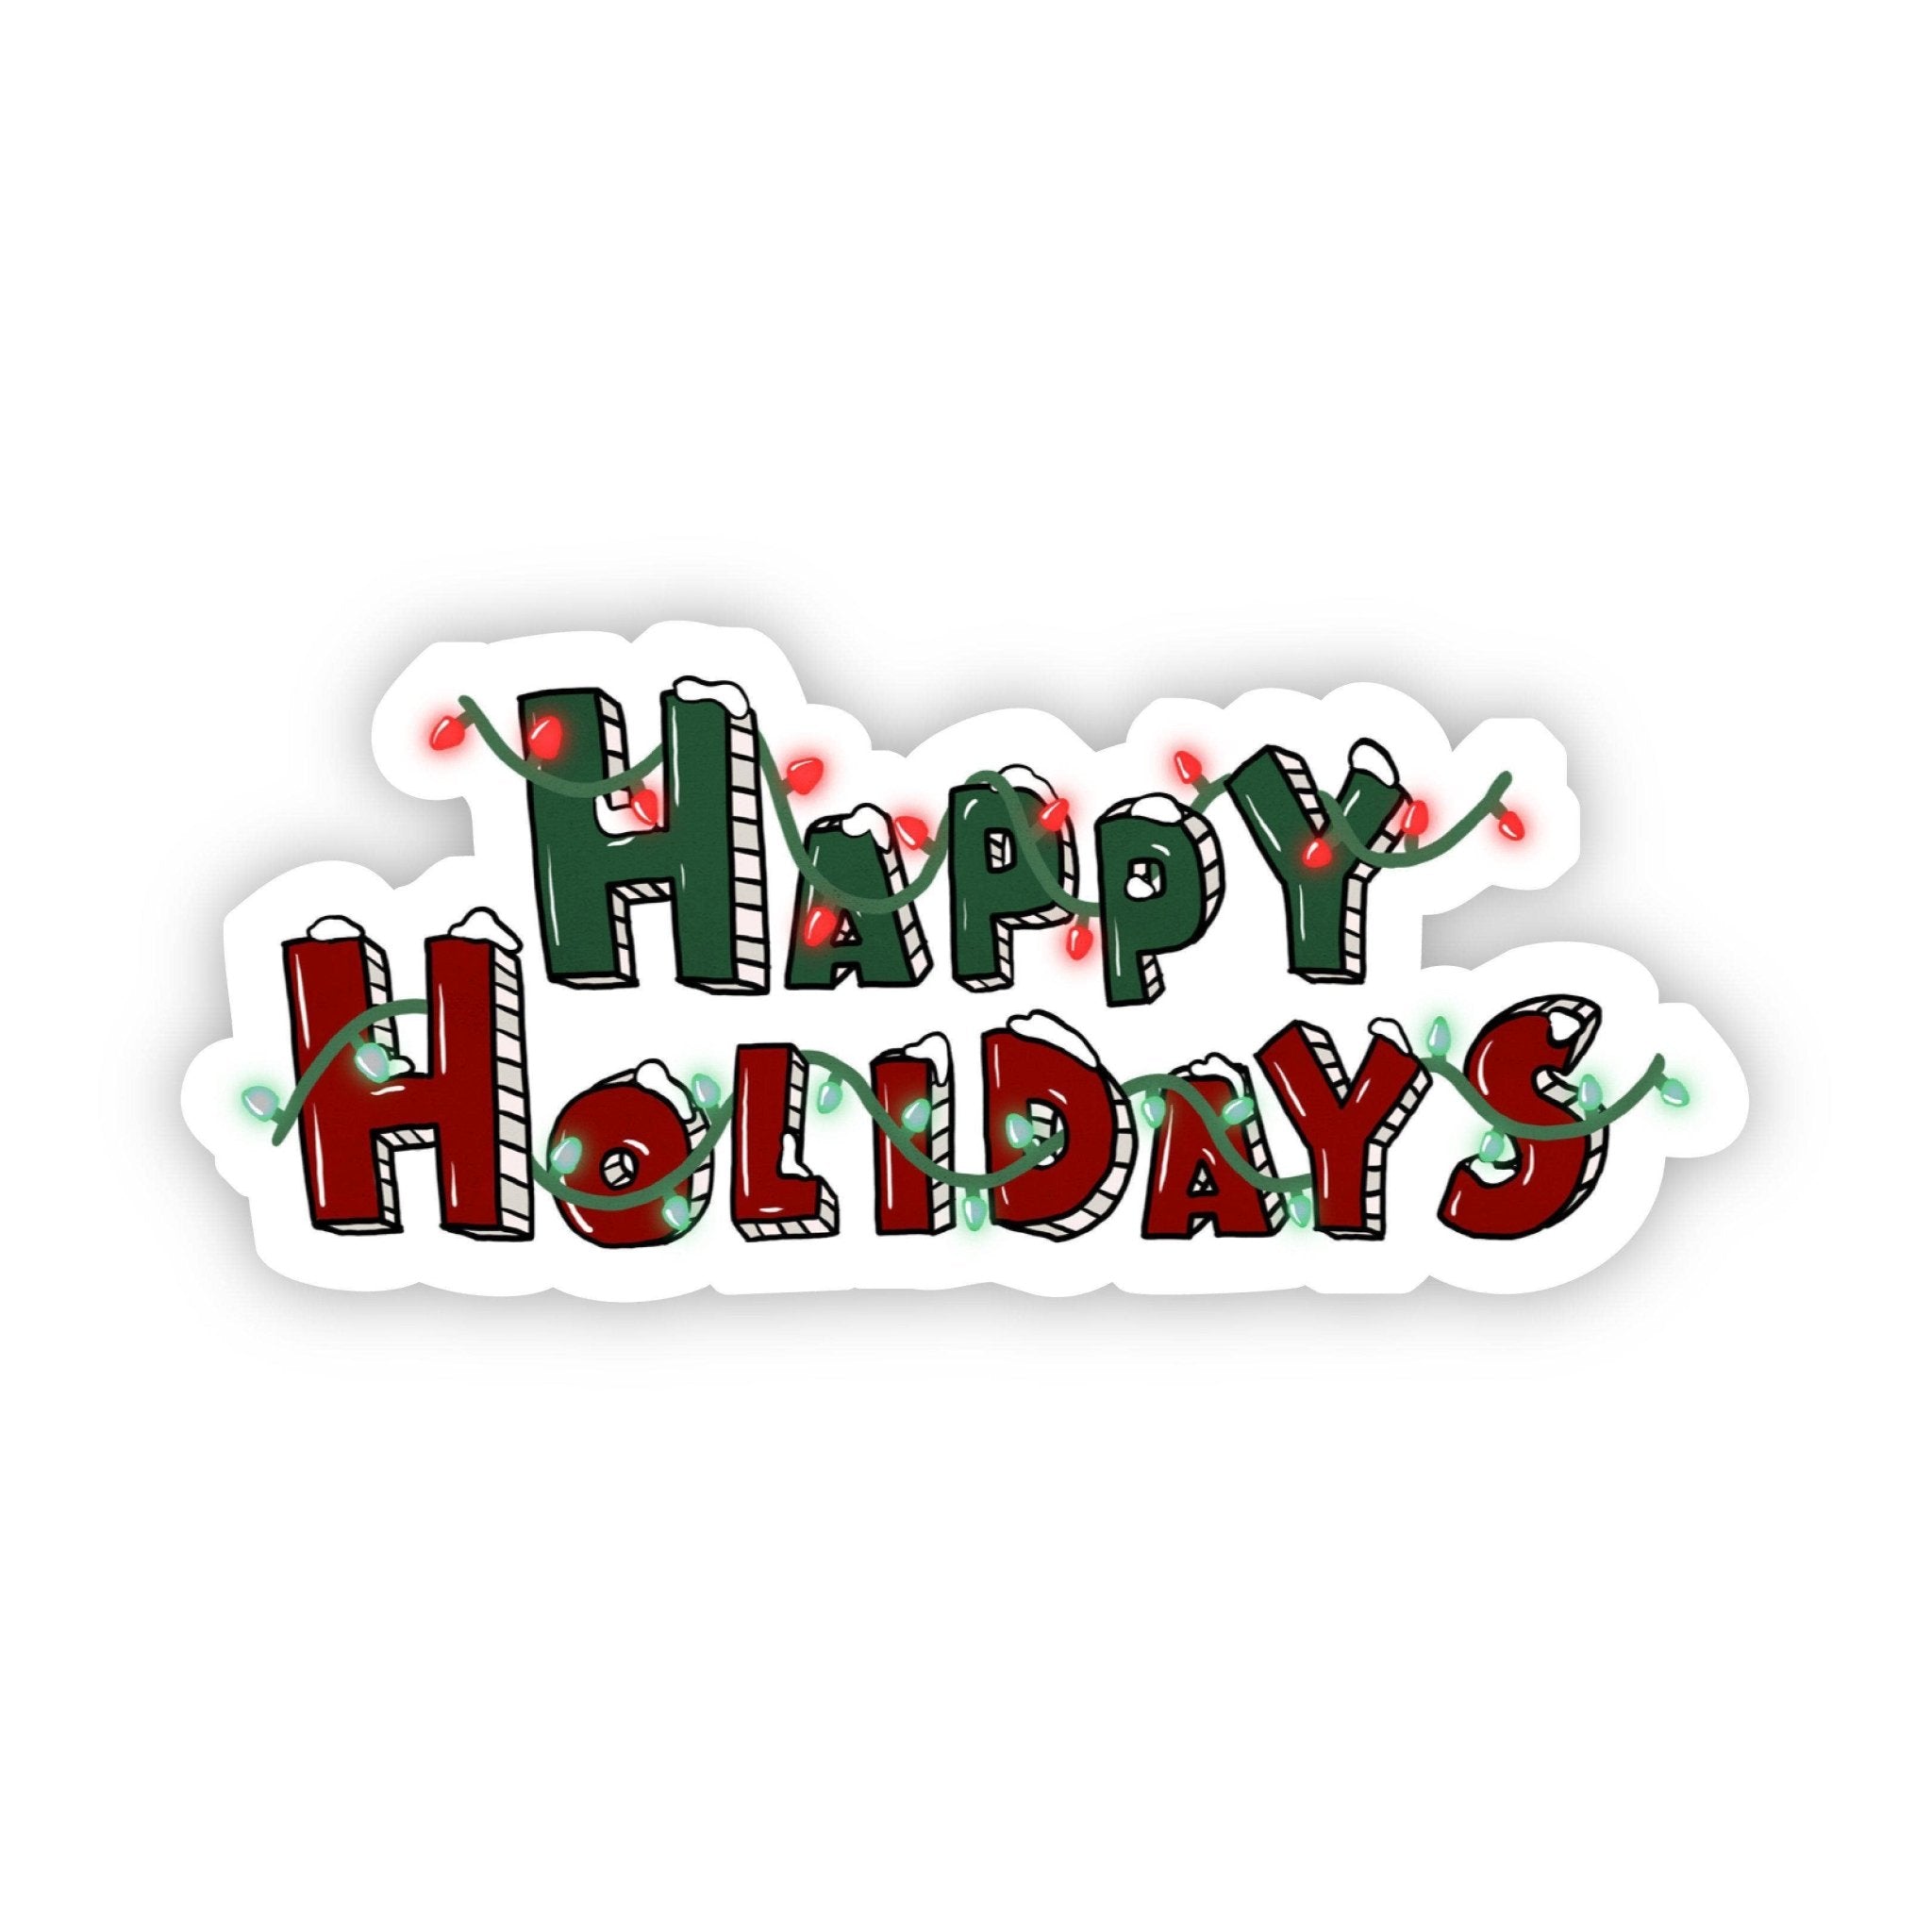 Holiday Deals 60 Off Sticker Holiday Stock Illustration 2307334665